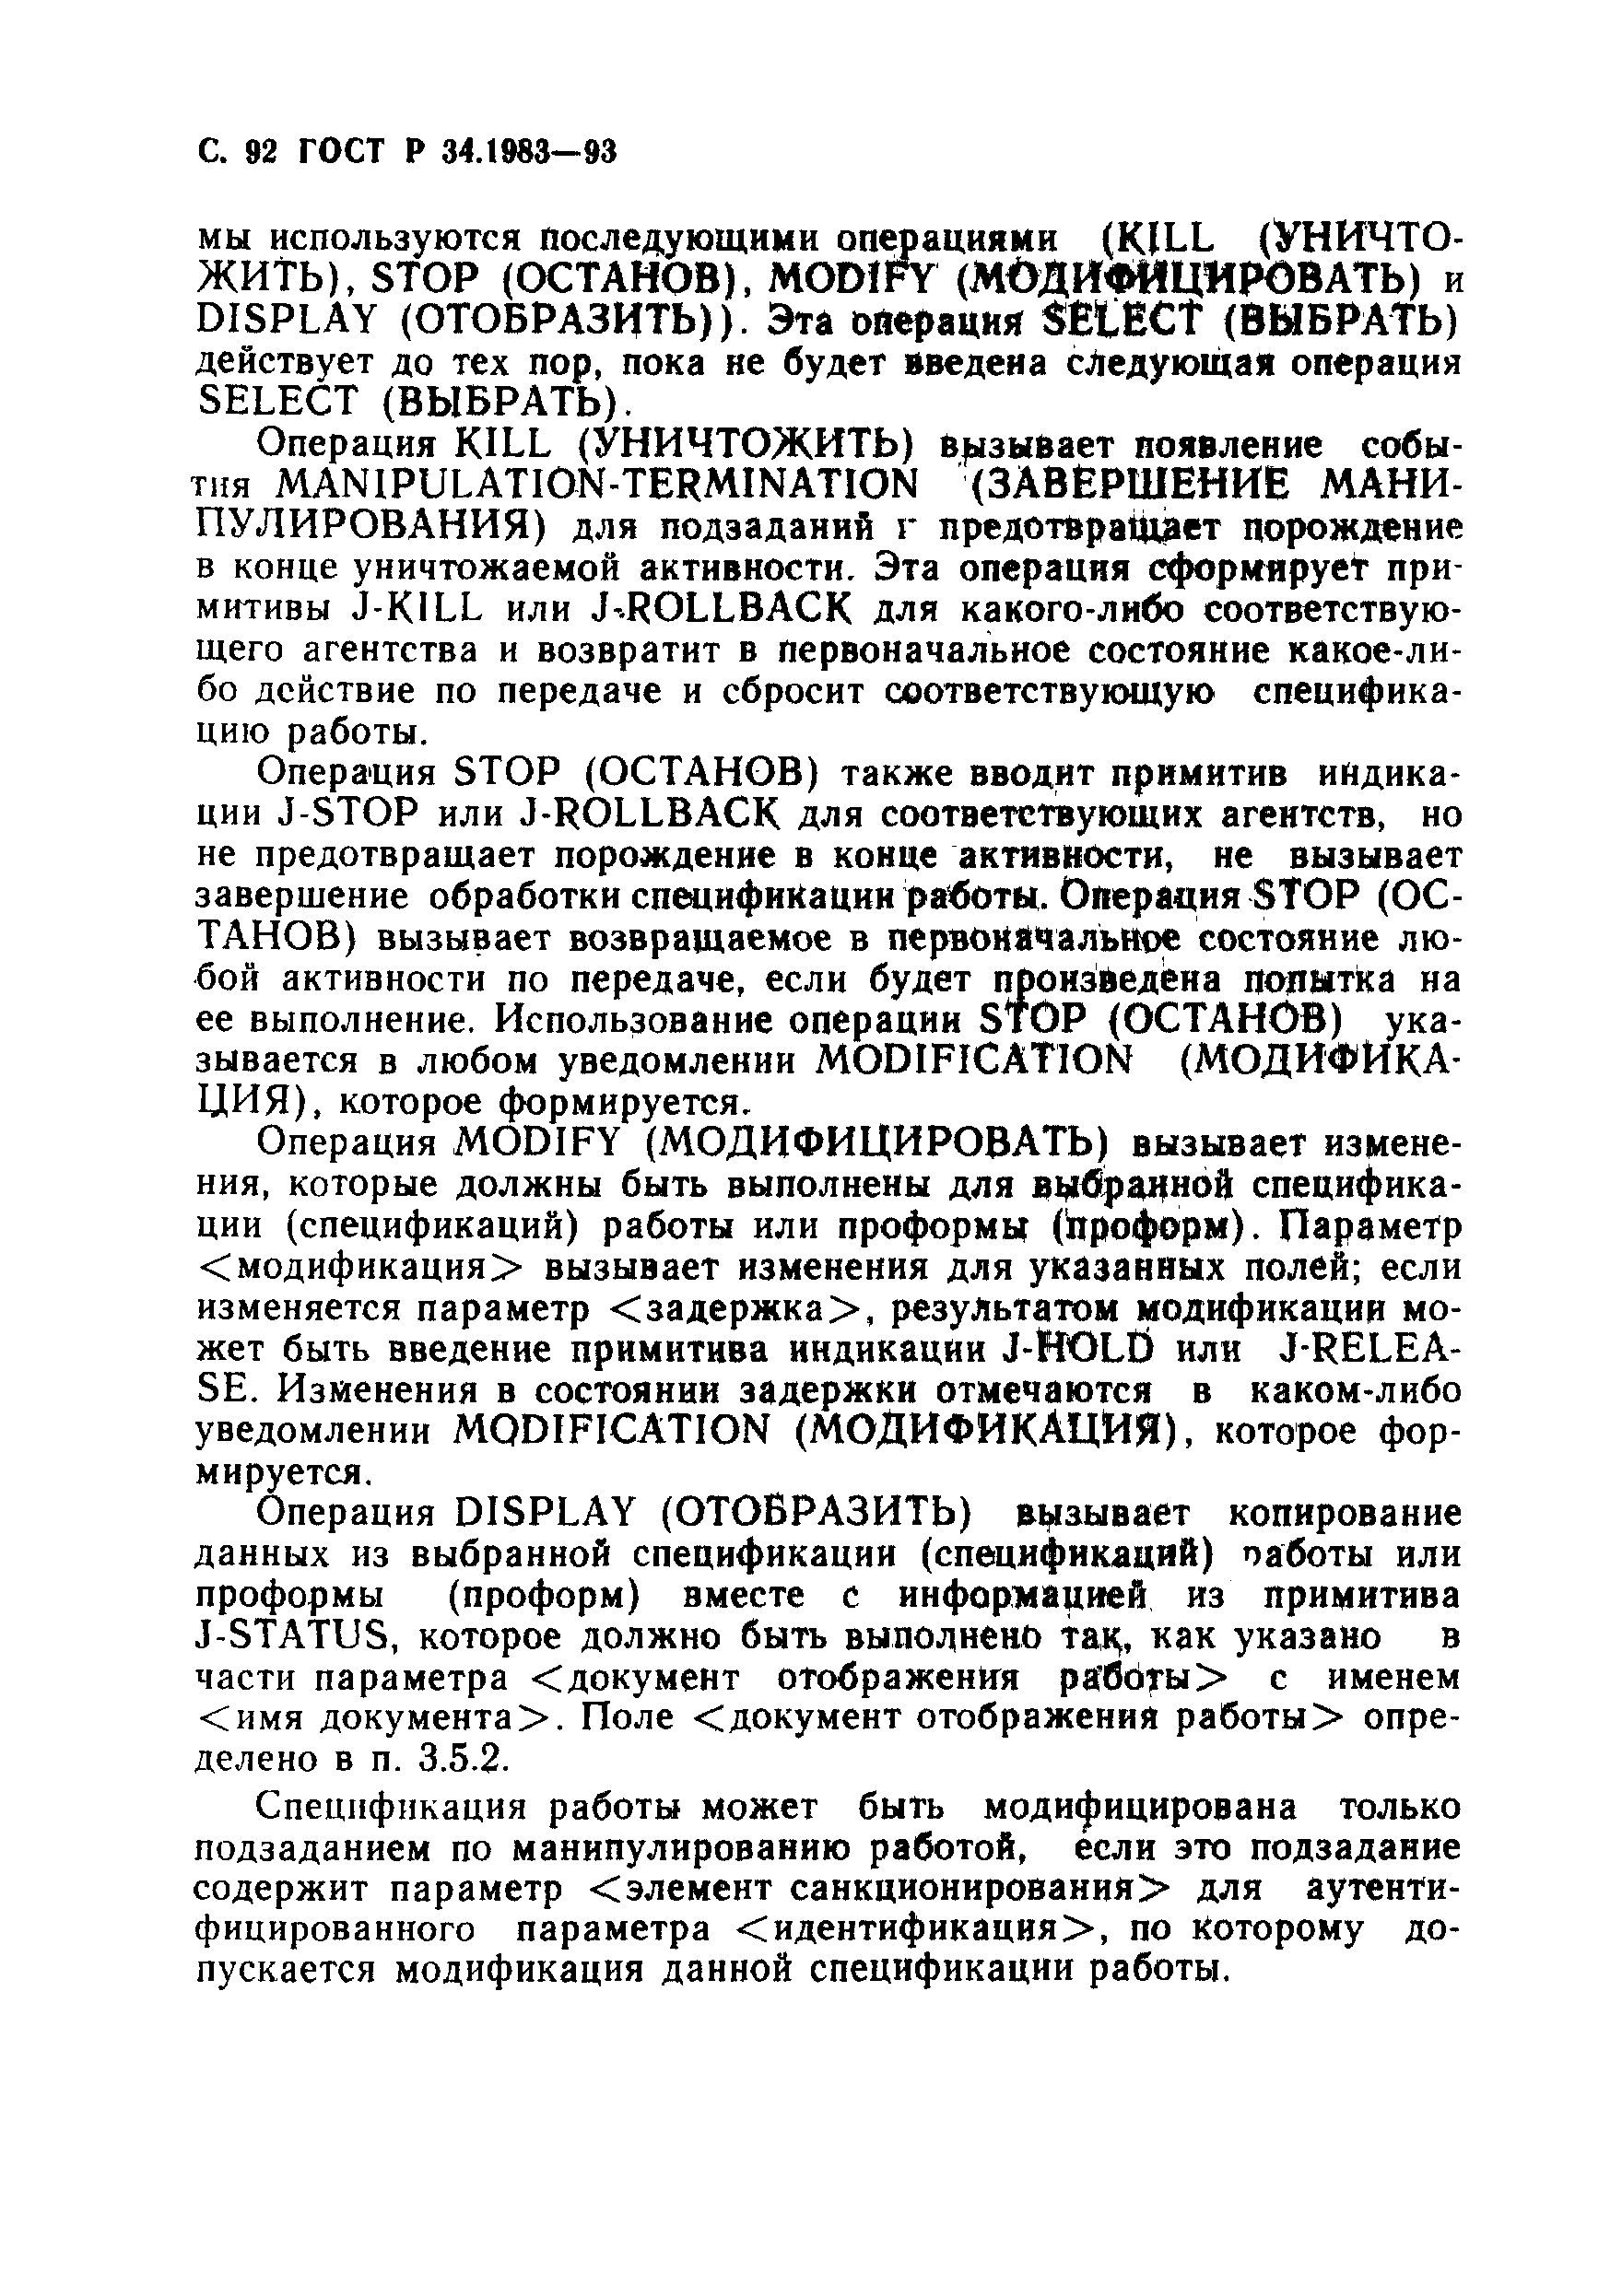 ГОСТ Р 34.1983-93. Страница 93